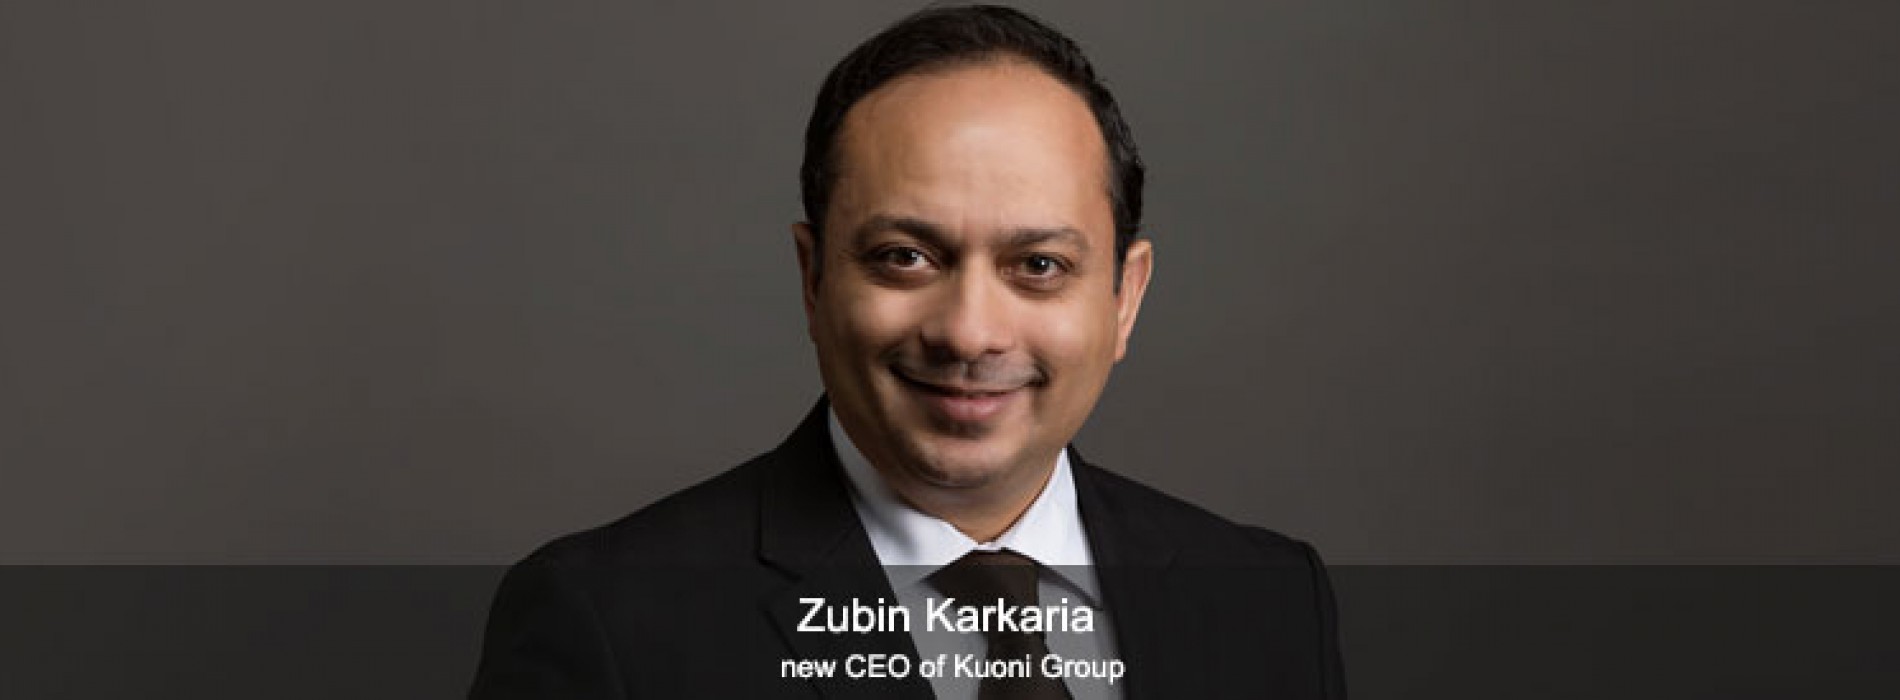 Zubin Karkaria: new CEO of Kuoni Group